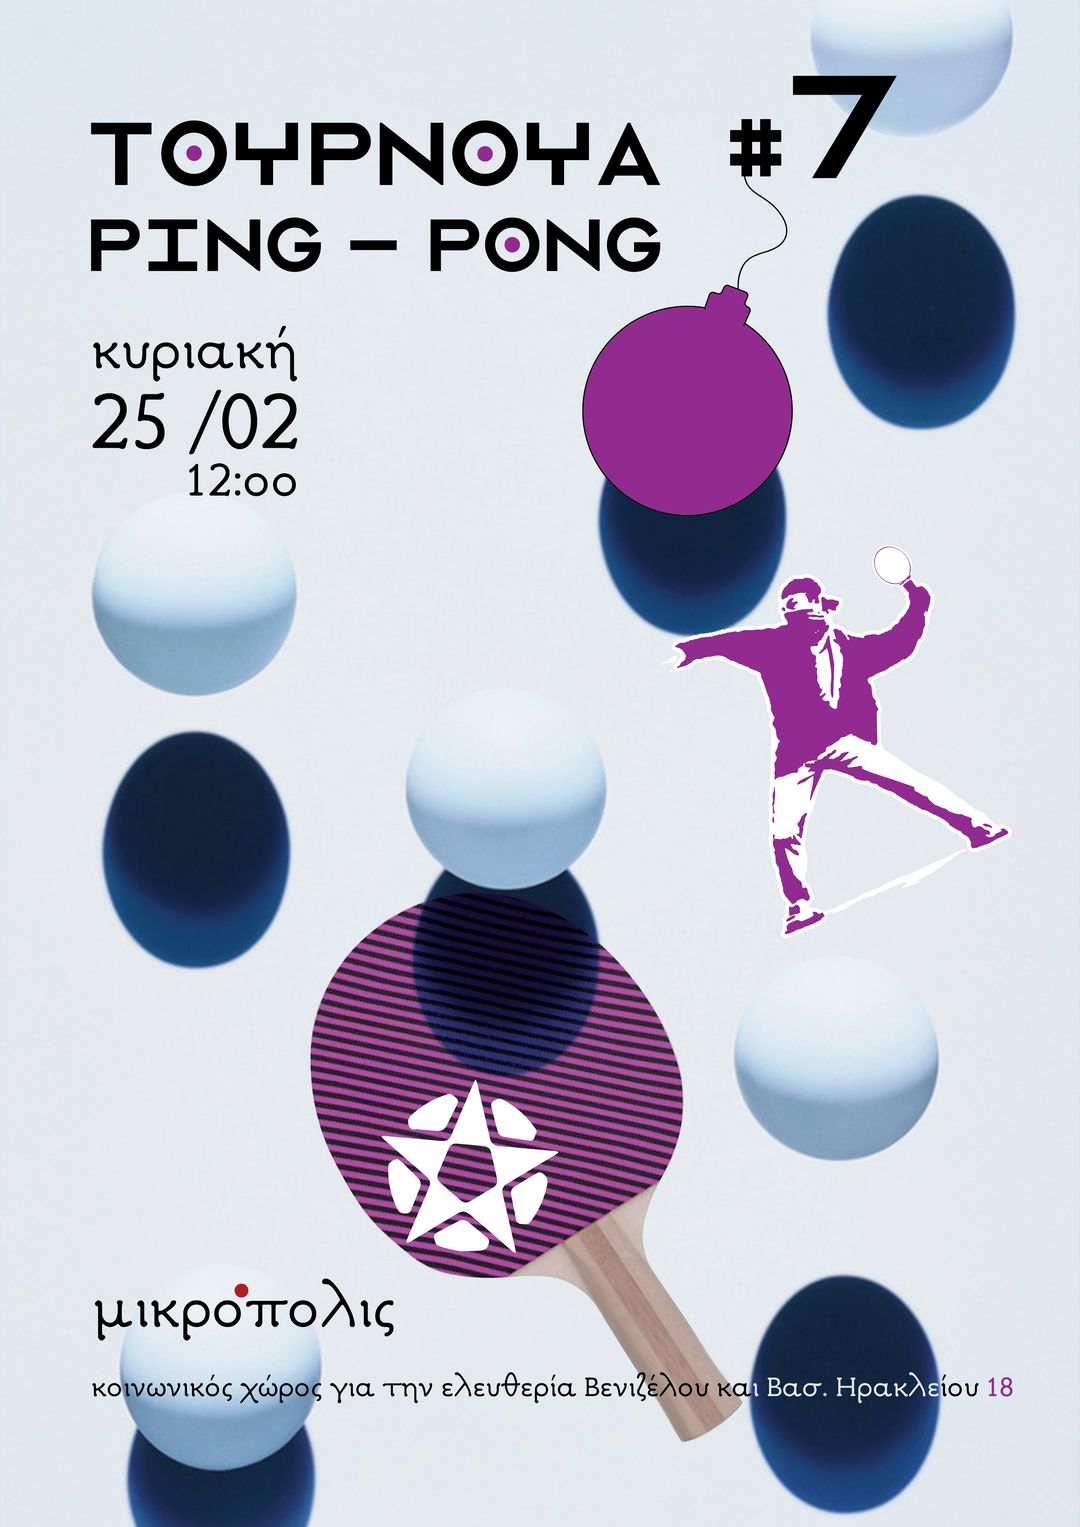 tournoua ping pong no7s